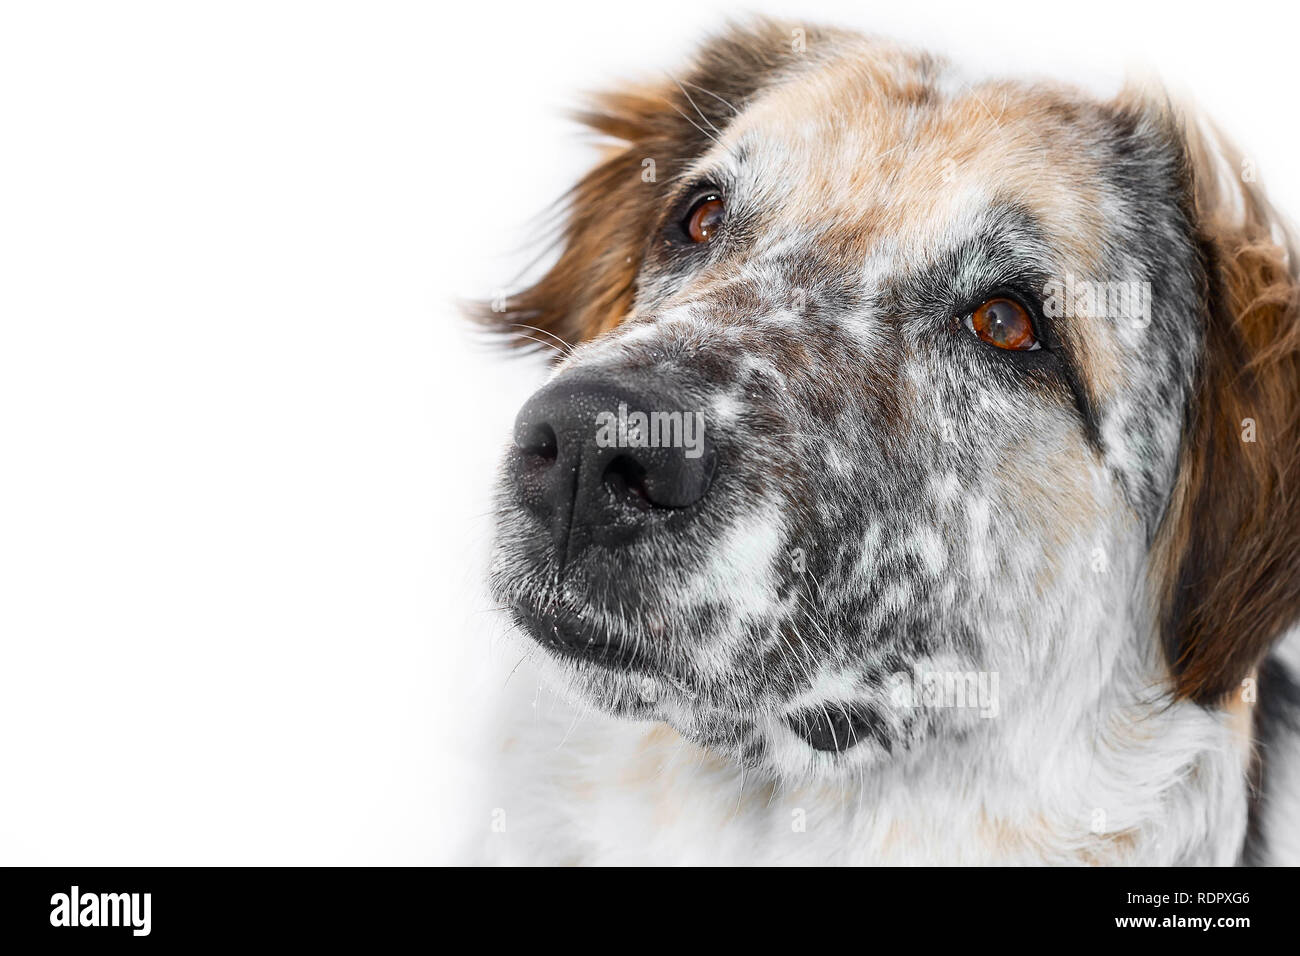 Big Dog museruola con naso umido close-up isolati su sfondo bianco Foto Stock